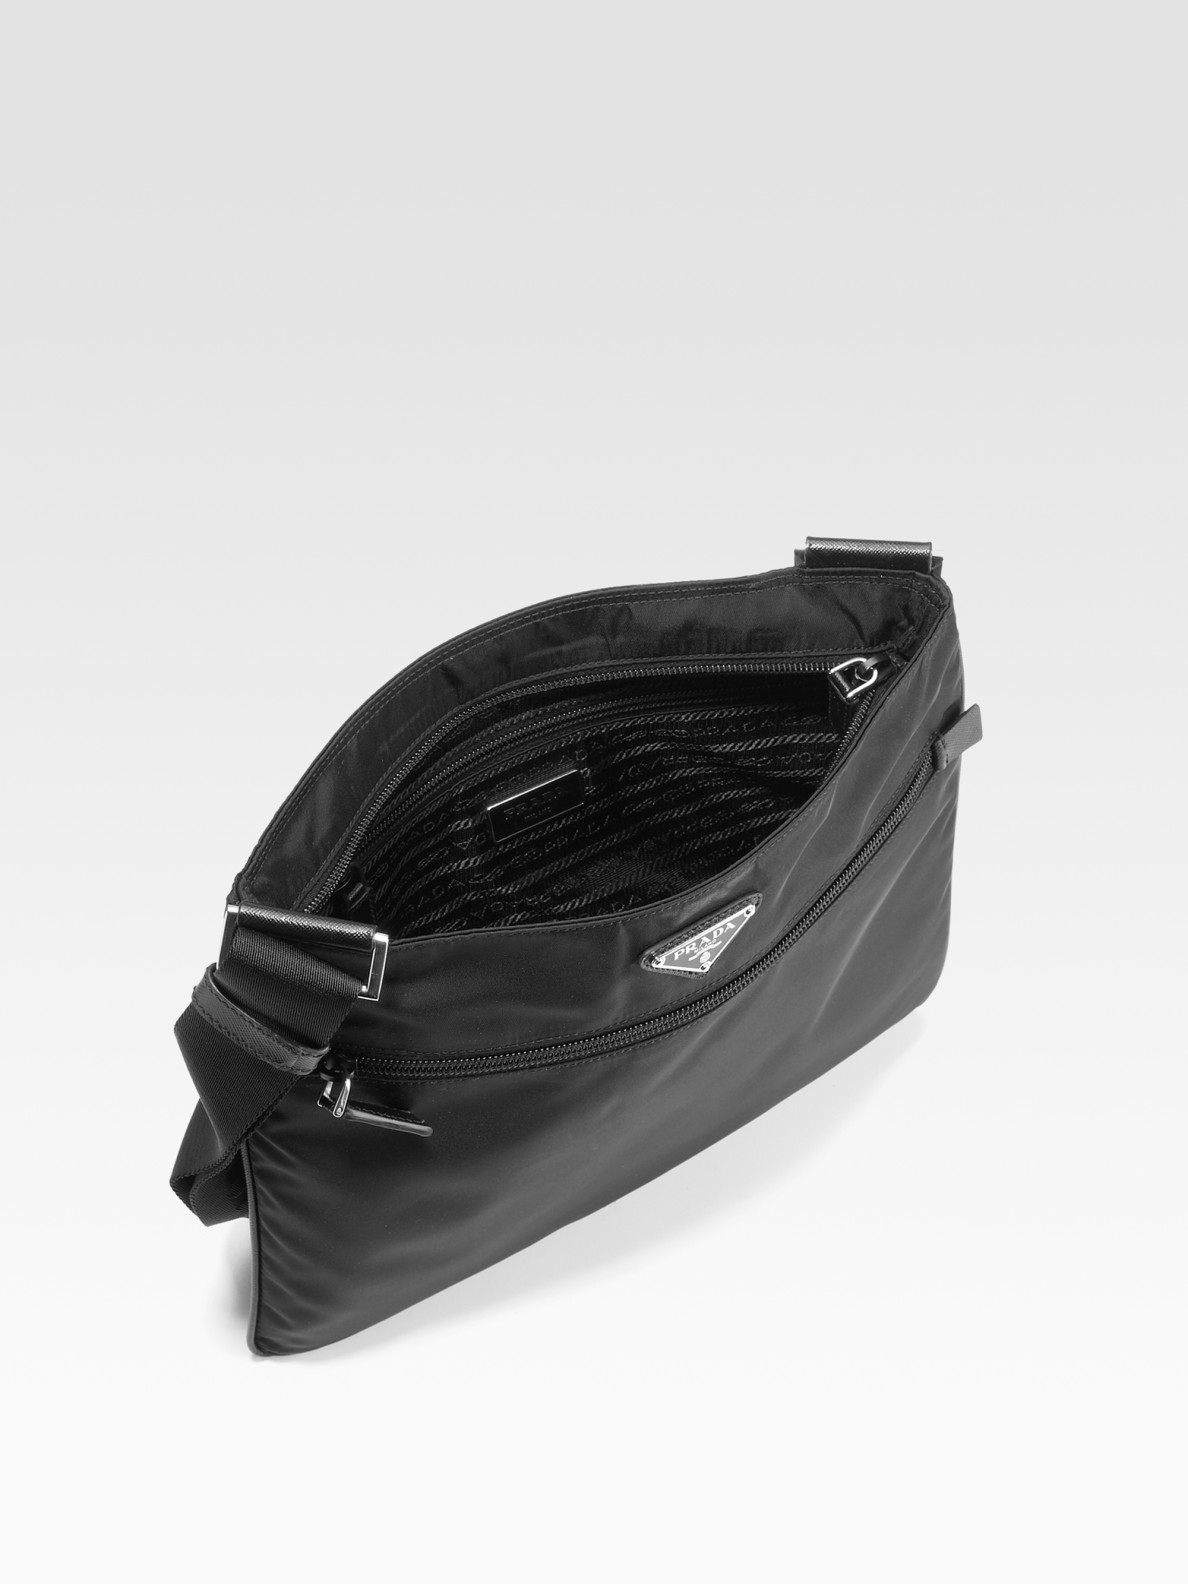 buy prada handbags online - Prada Nylon \u0026amp; Leather Messenger Bag in Black for Men | Lyst